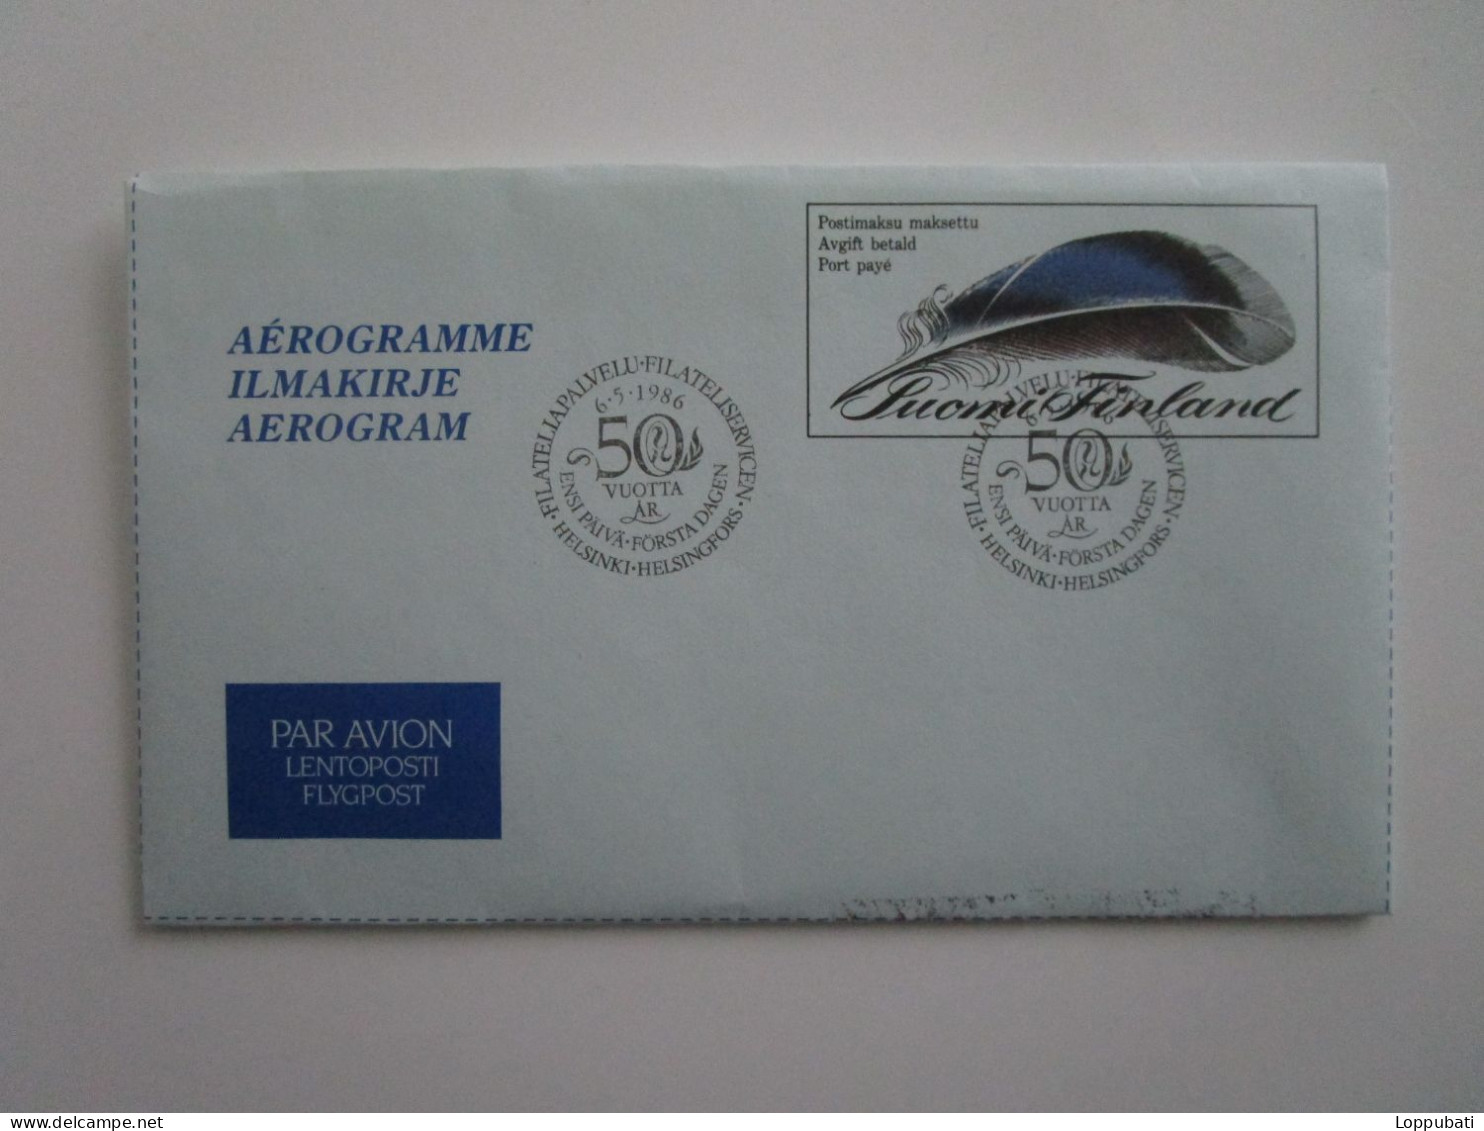 Finnland Luftpost-Aerogram - Used Stamps